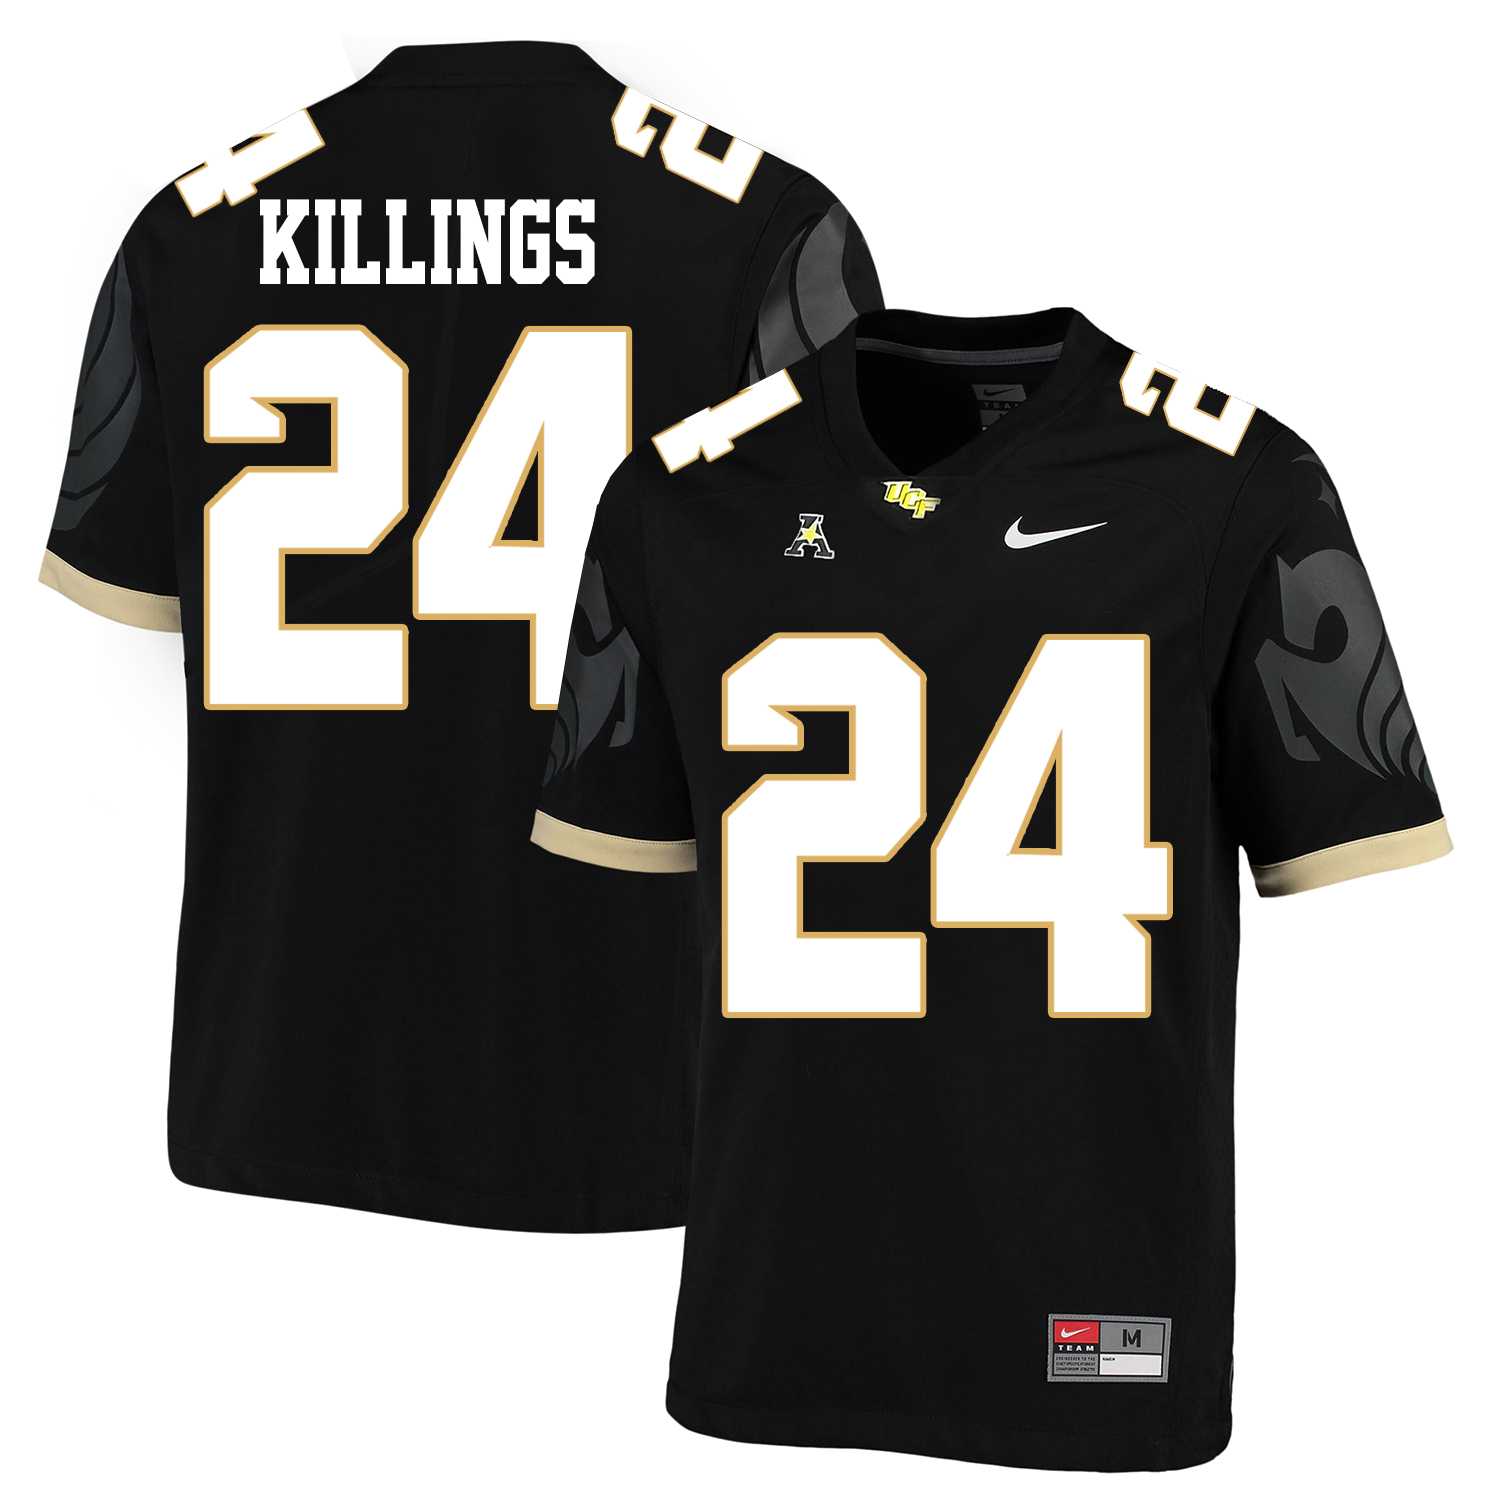 UCF Knights 24 D.J. Killings Black College Football Jersey DingZhi